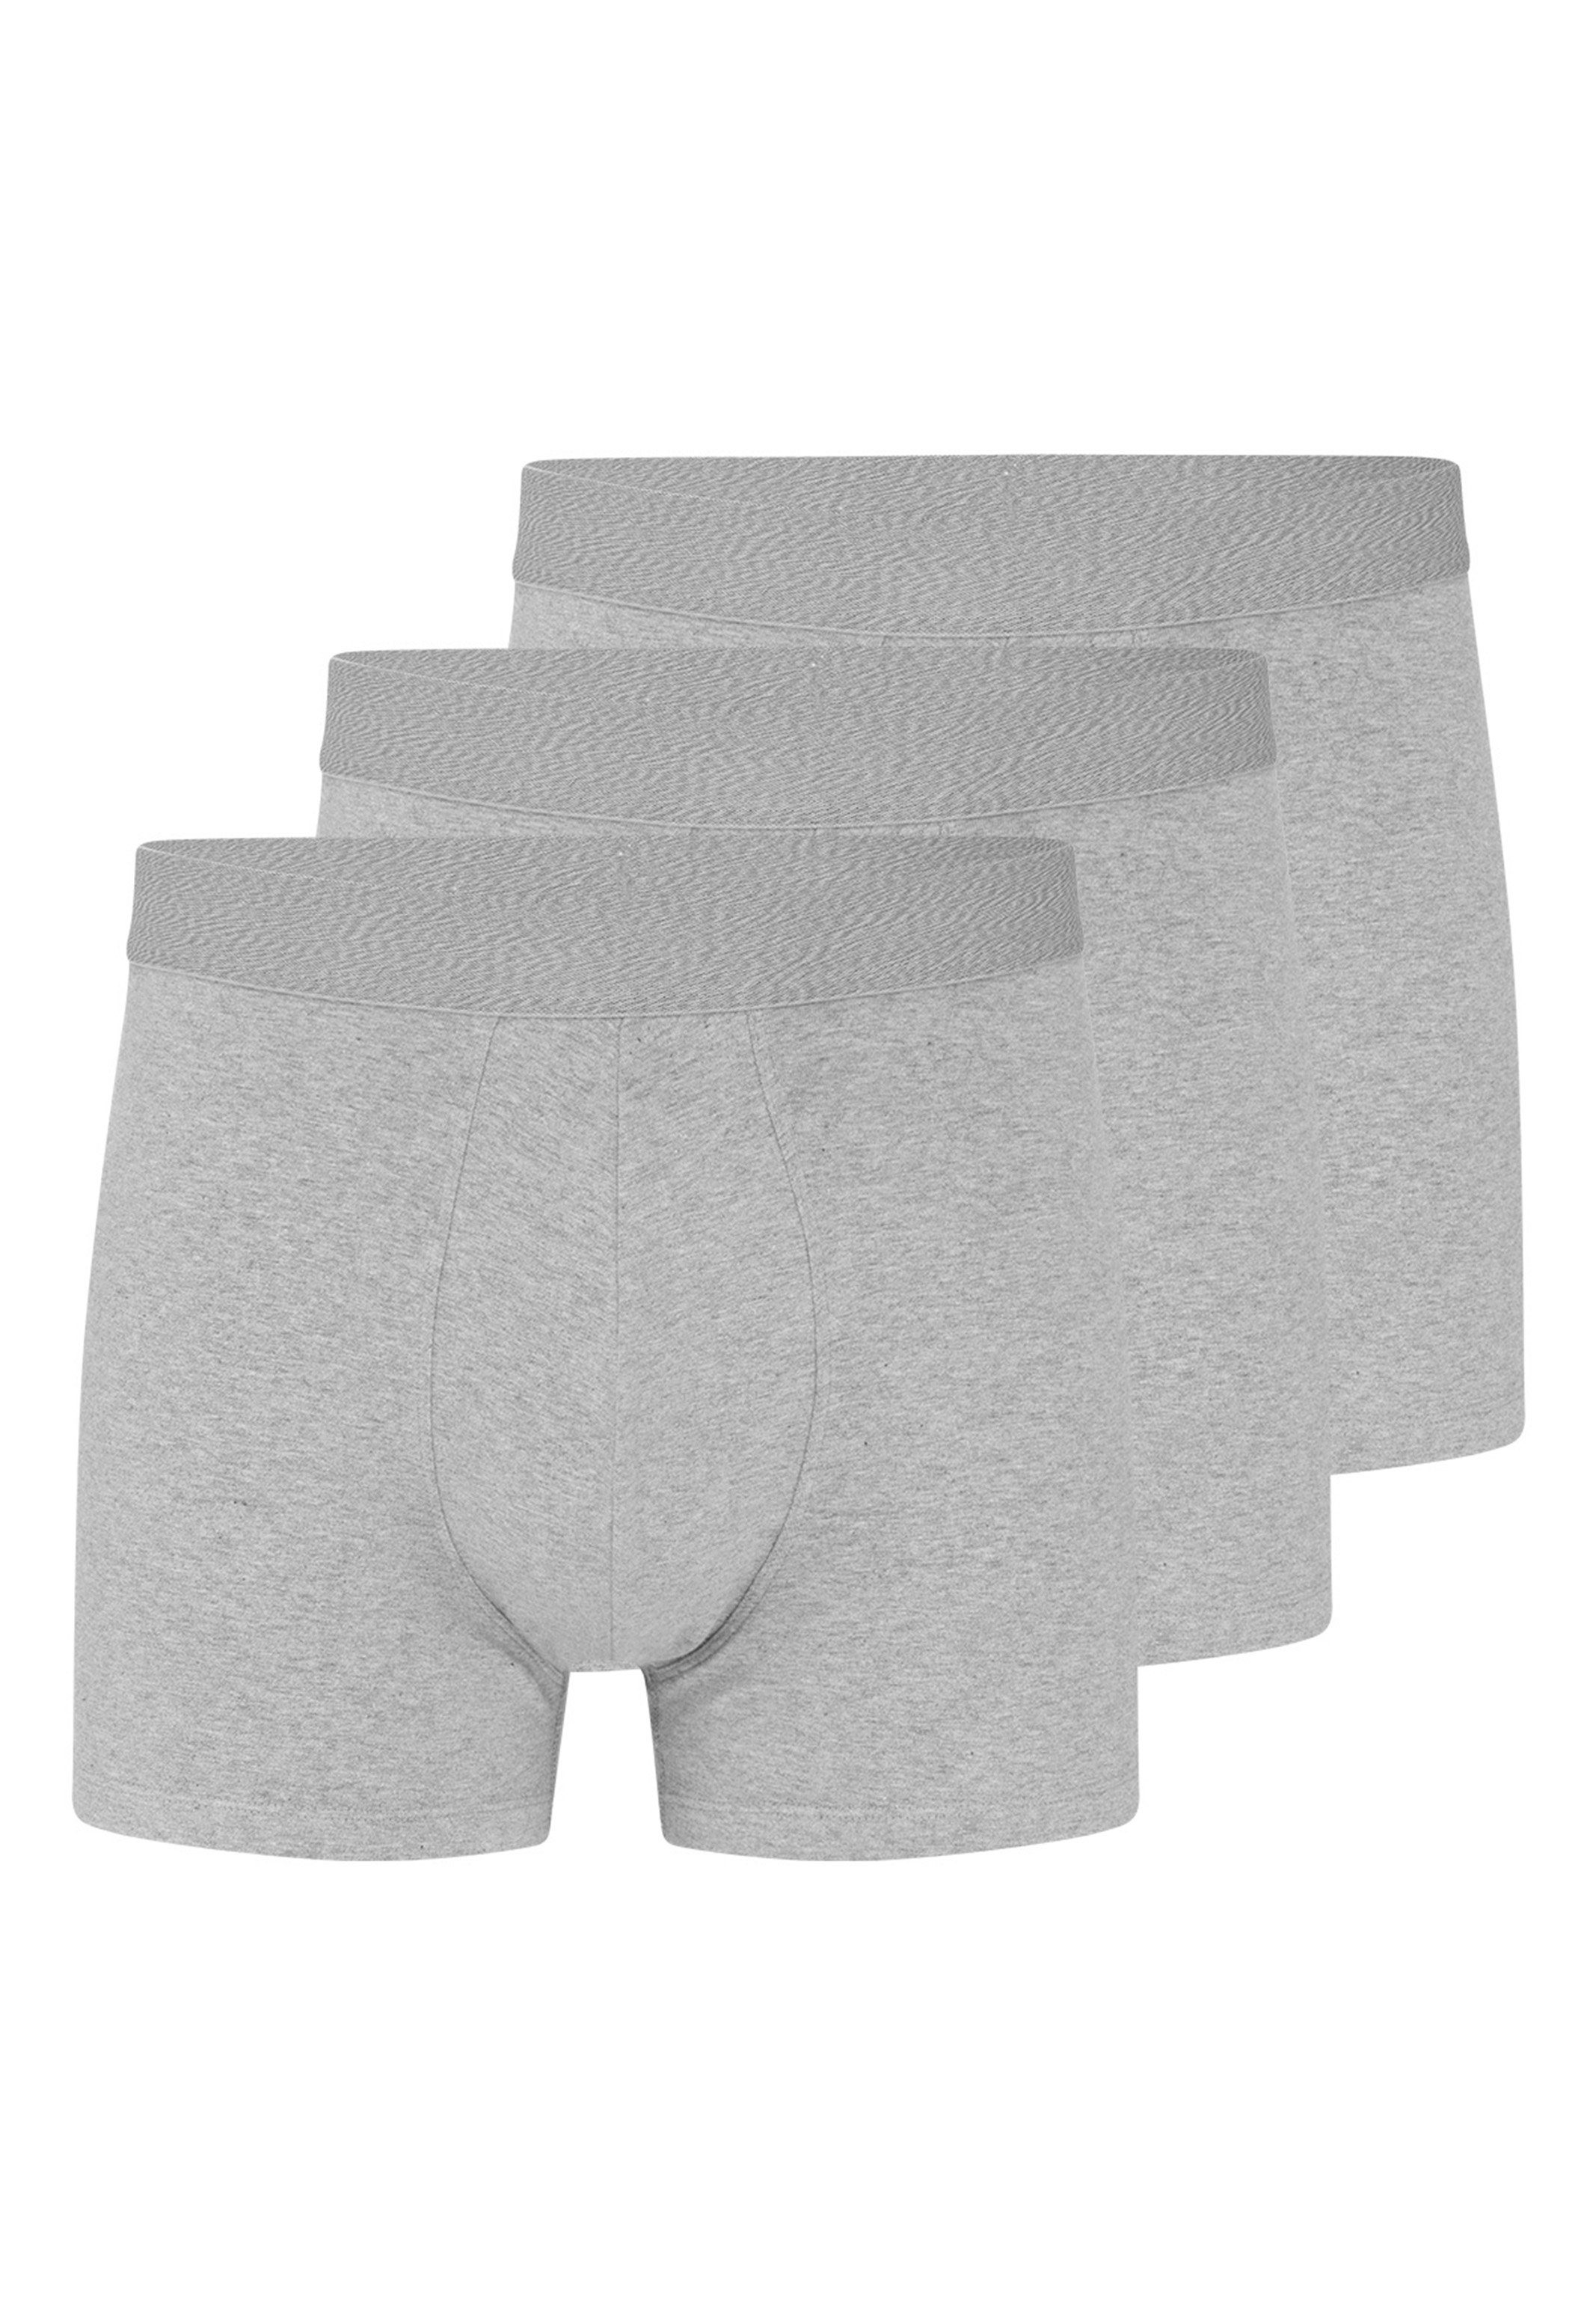 Almonu Retro Boxer 3er Pack Organic Cotton (Spar-Set, 3-St) Retro Short / Pant - Baumwolle - Ohne Eingriff - Atmungsaktiv Grau Melange